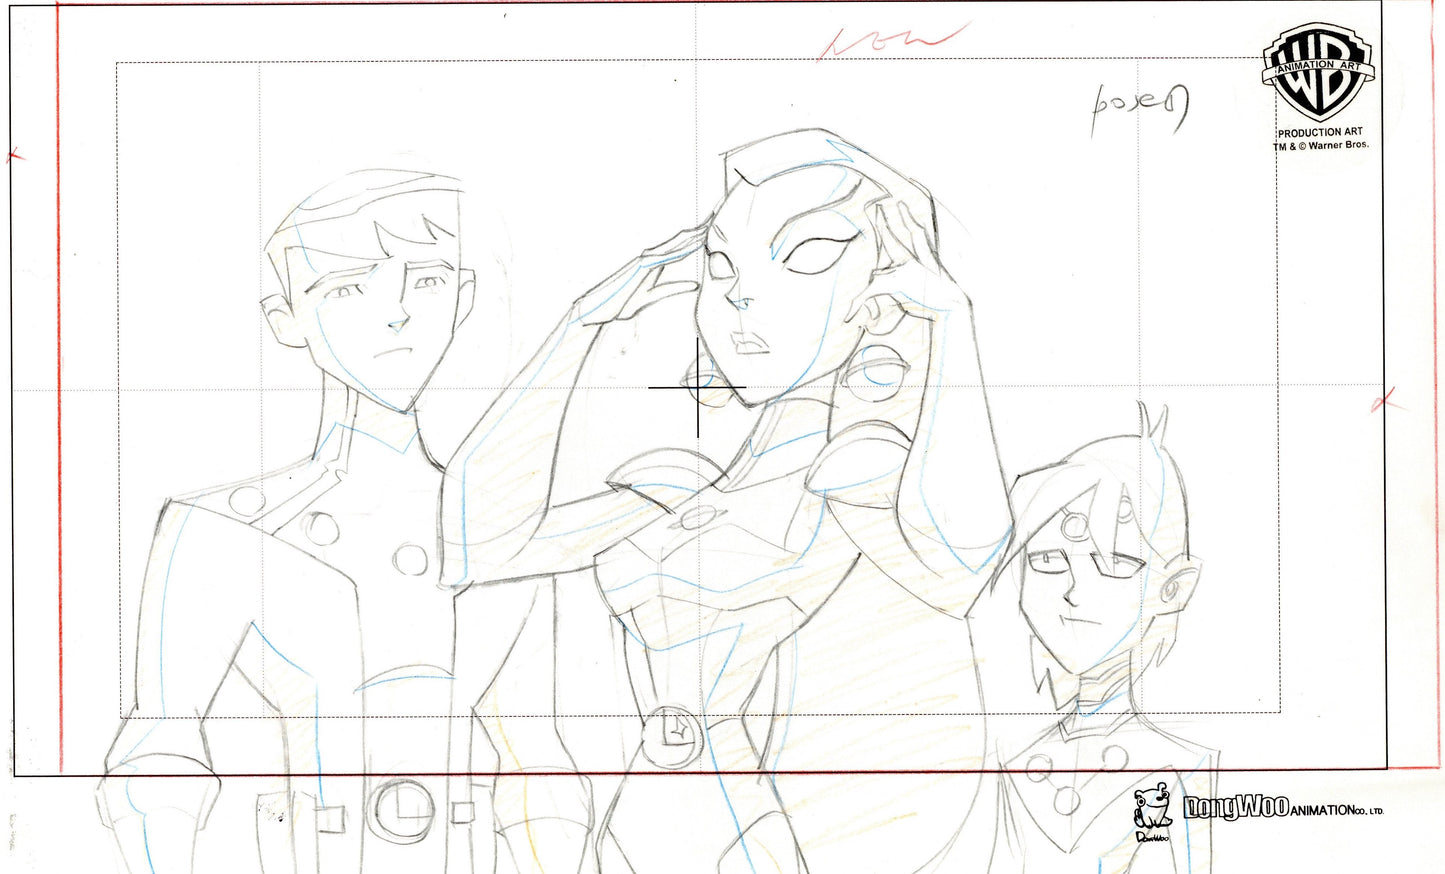 Legion of Superheroes Original Production Drawing: Saturn Girl, Cosmic Boy, Brainiac 5